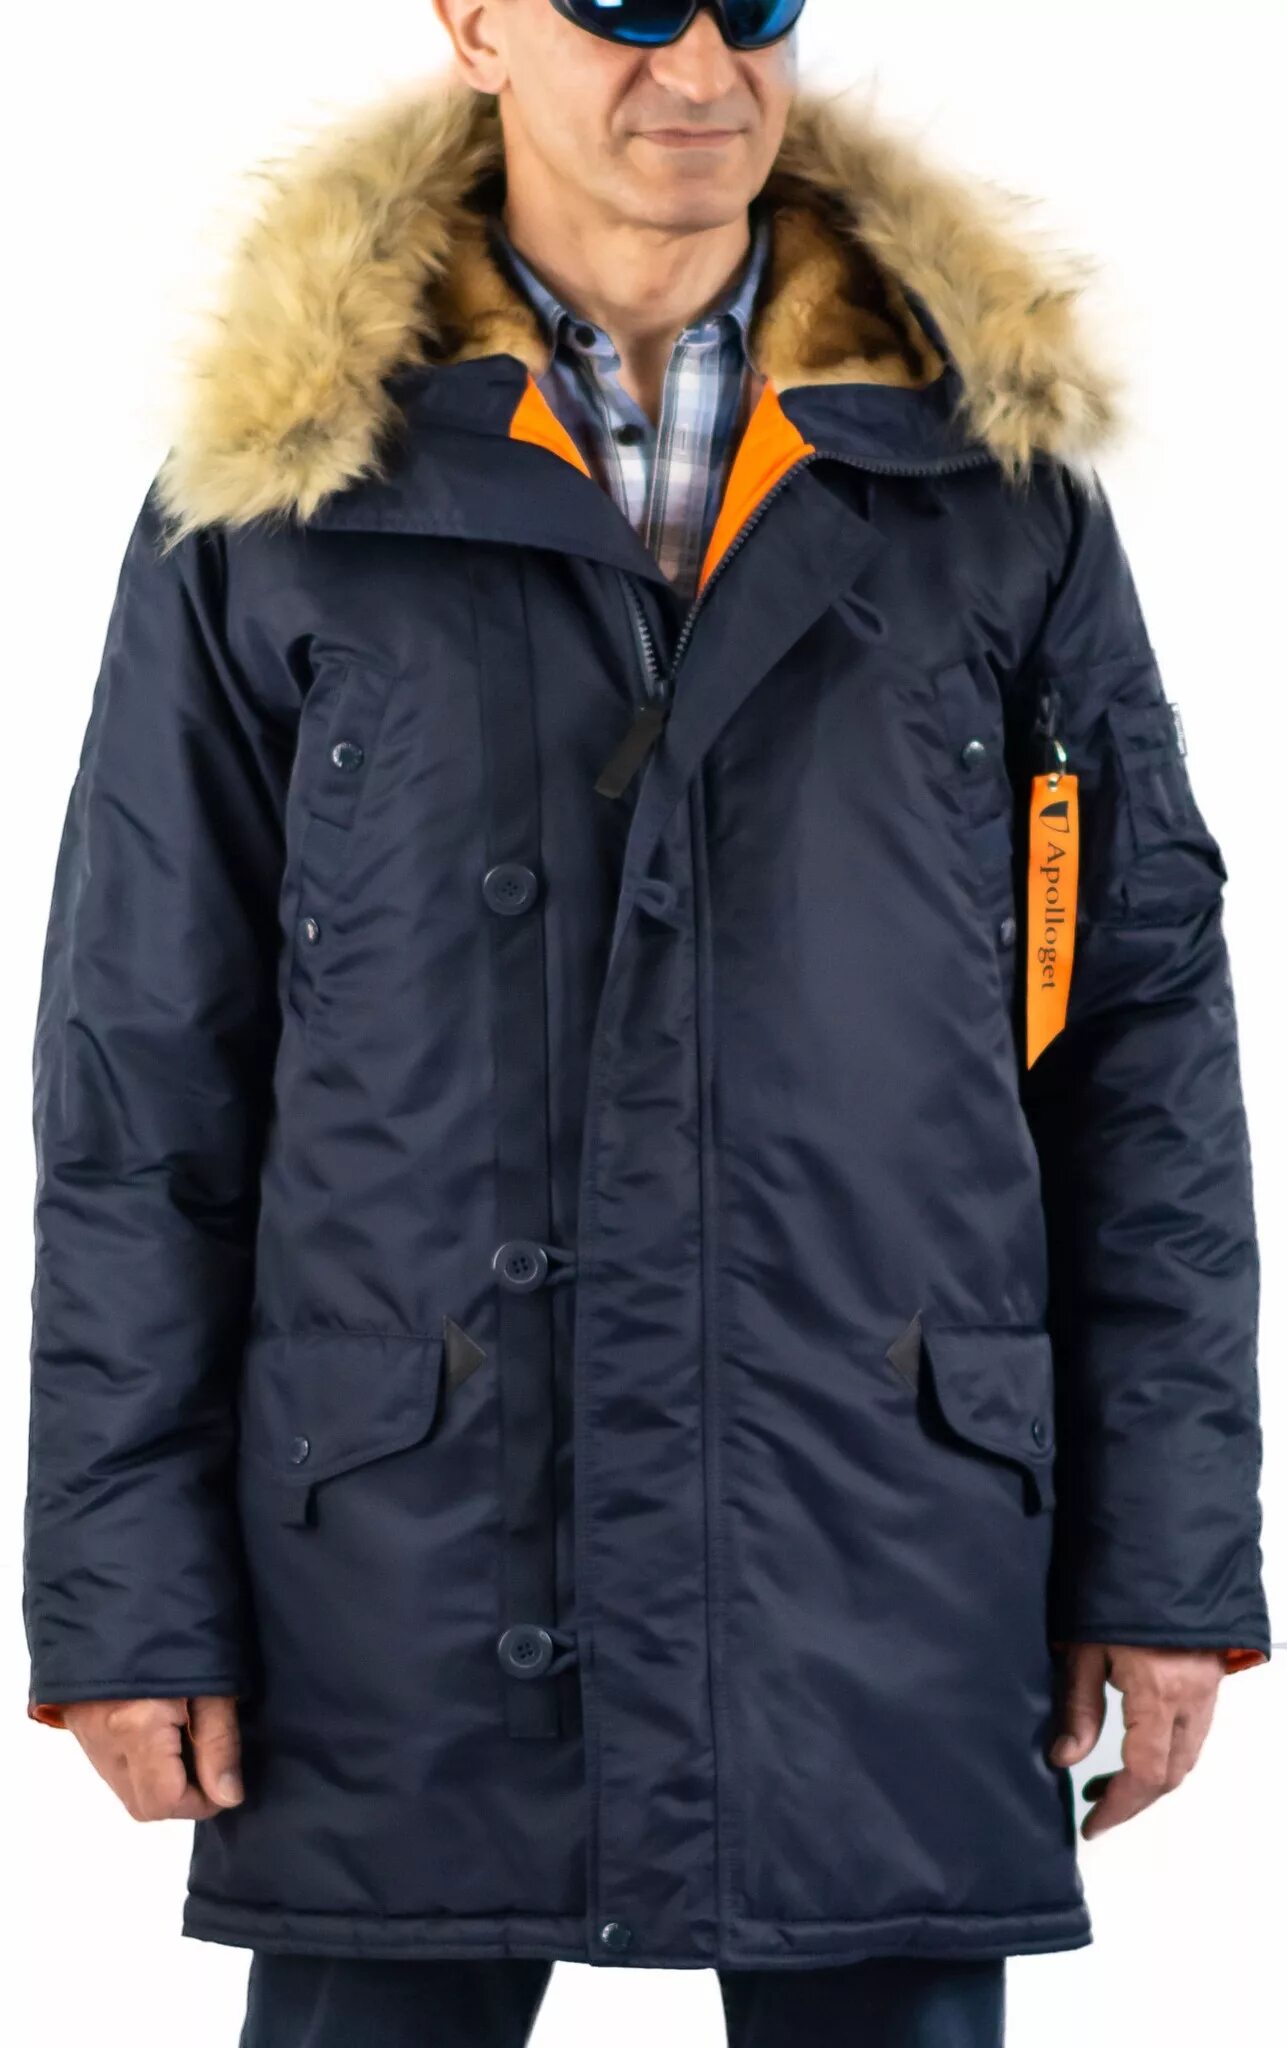 Куртка Аляска Husky long Olive/Orange Apolloget. Аляска зимняя мужская куртка 8xl. Зимняя куртка Аляска Airboss Parka. Аляска Husky Apolloget. Канадские аляски